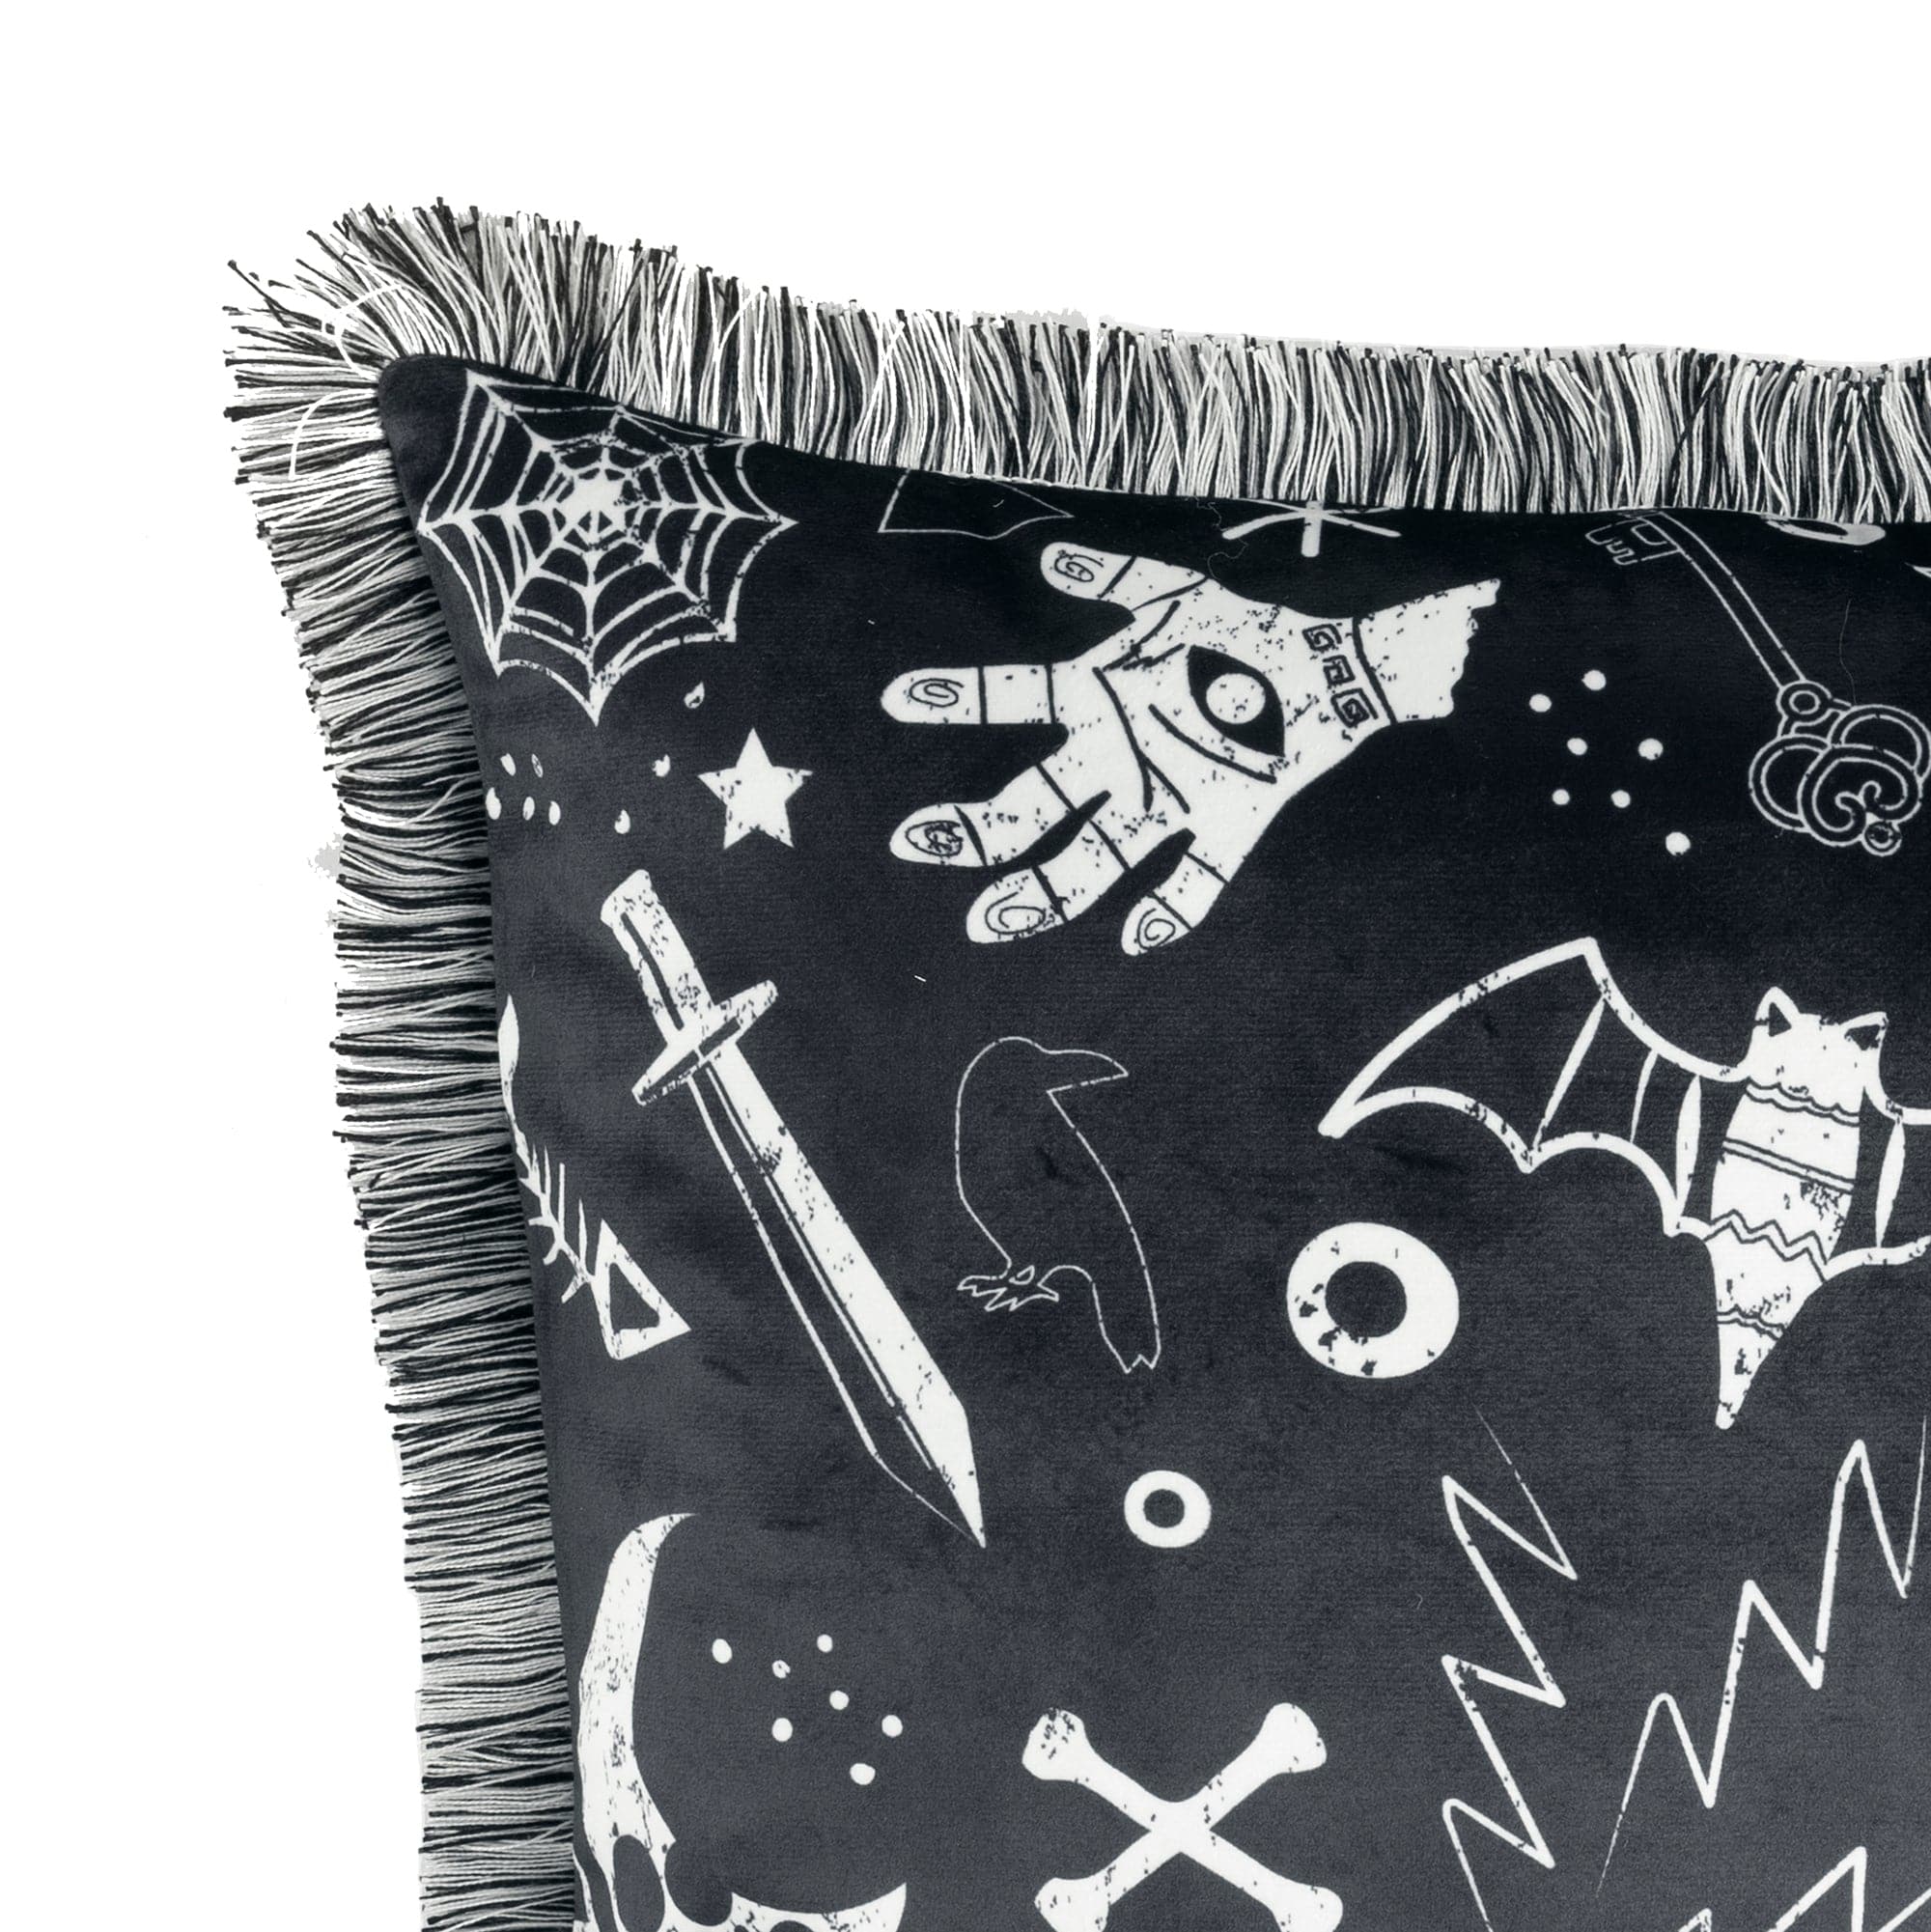 Lush Decor Rocking Skeleton Decorative Pillow, 12 x 12 - Black